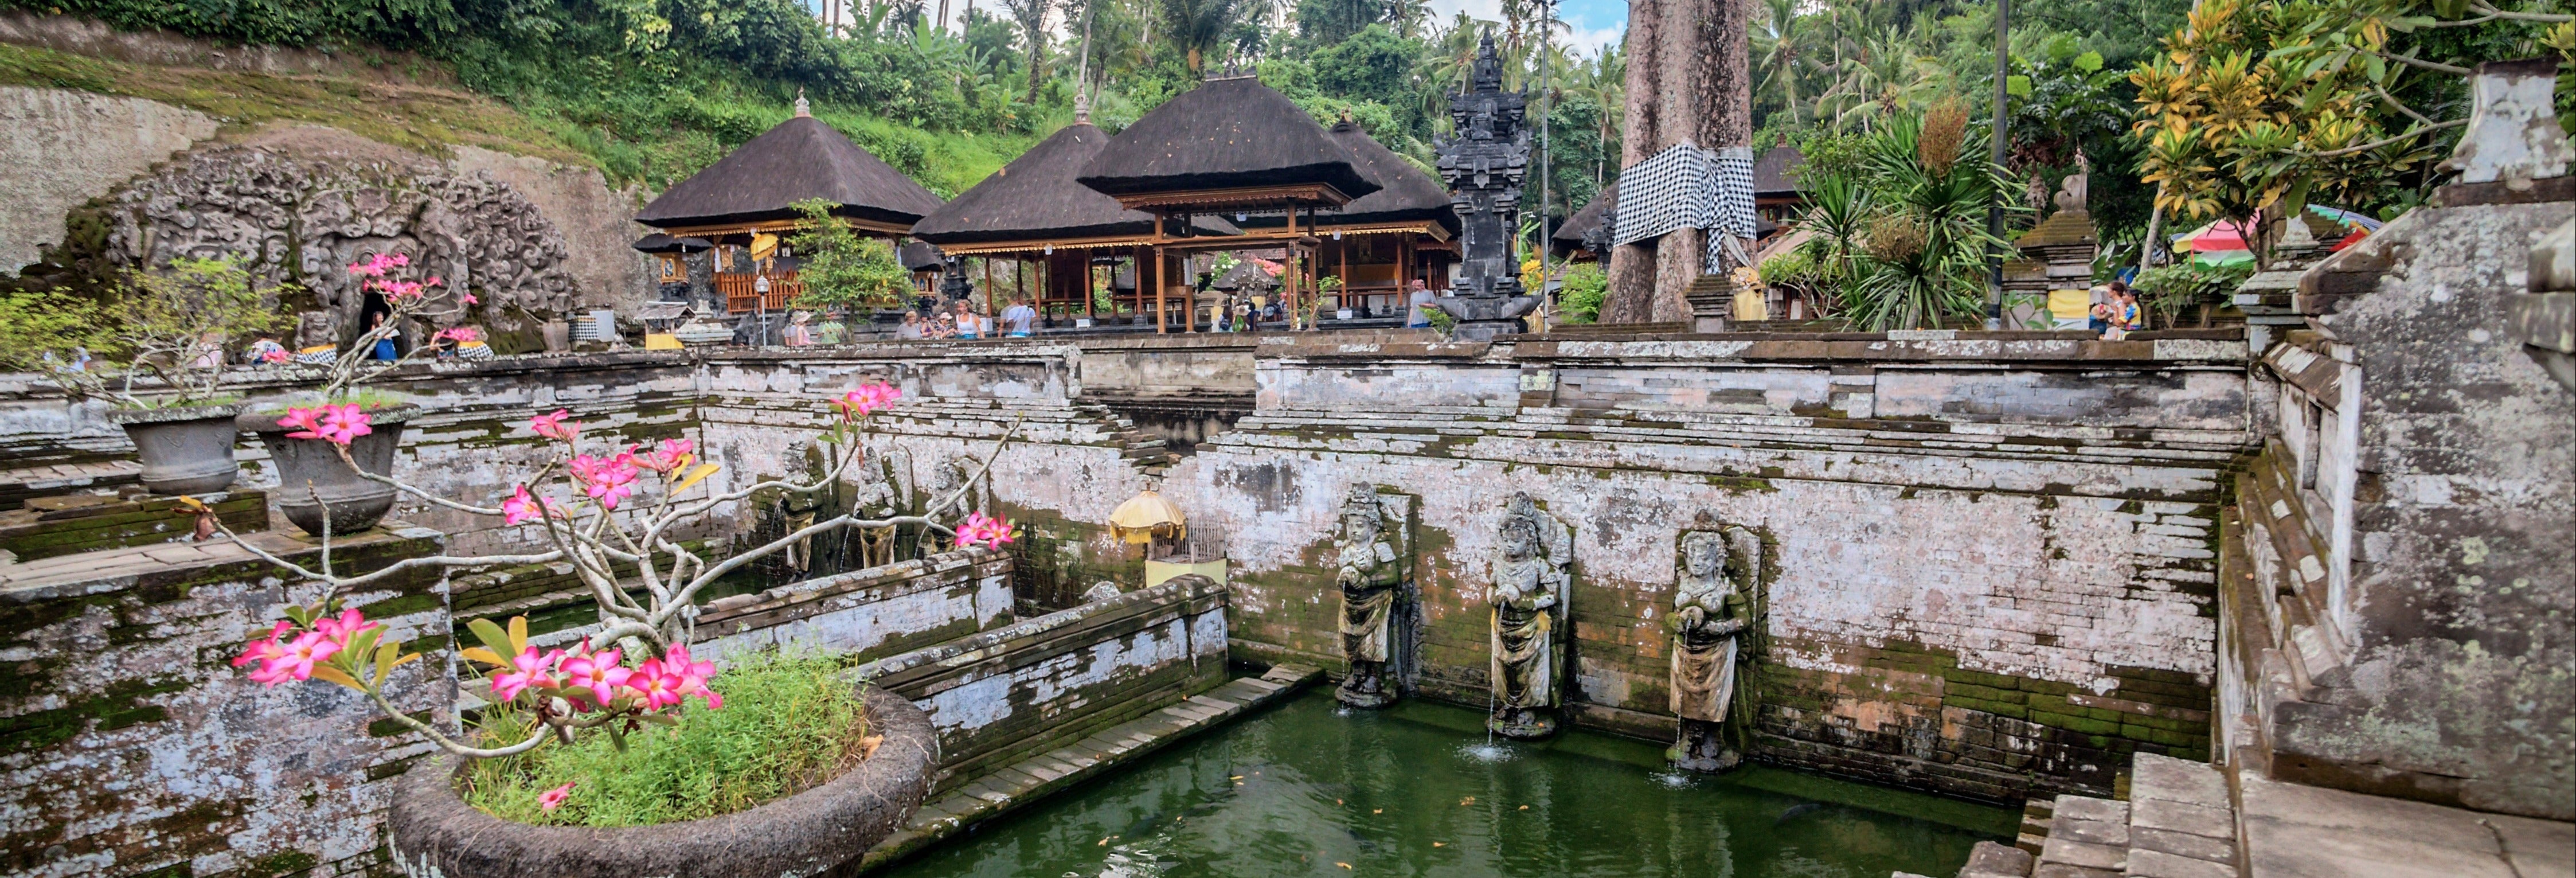 Ubud, Goa Gajah and Central Bali